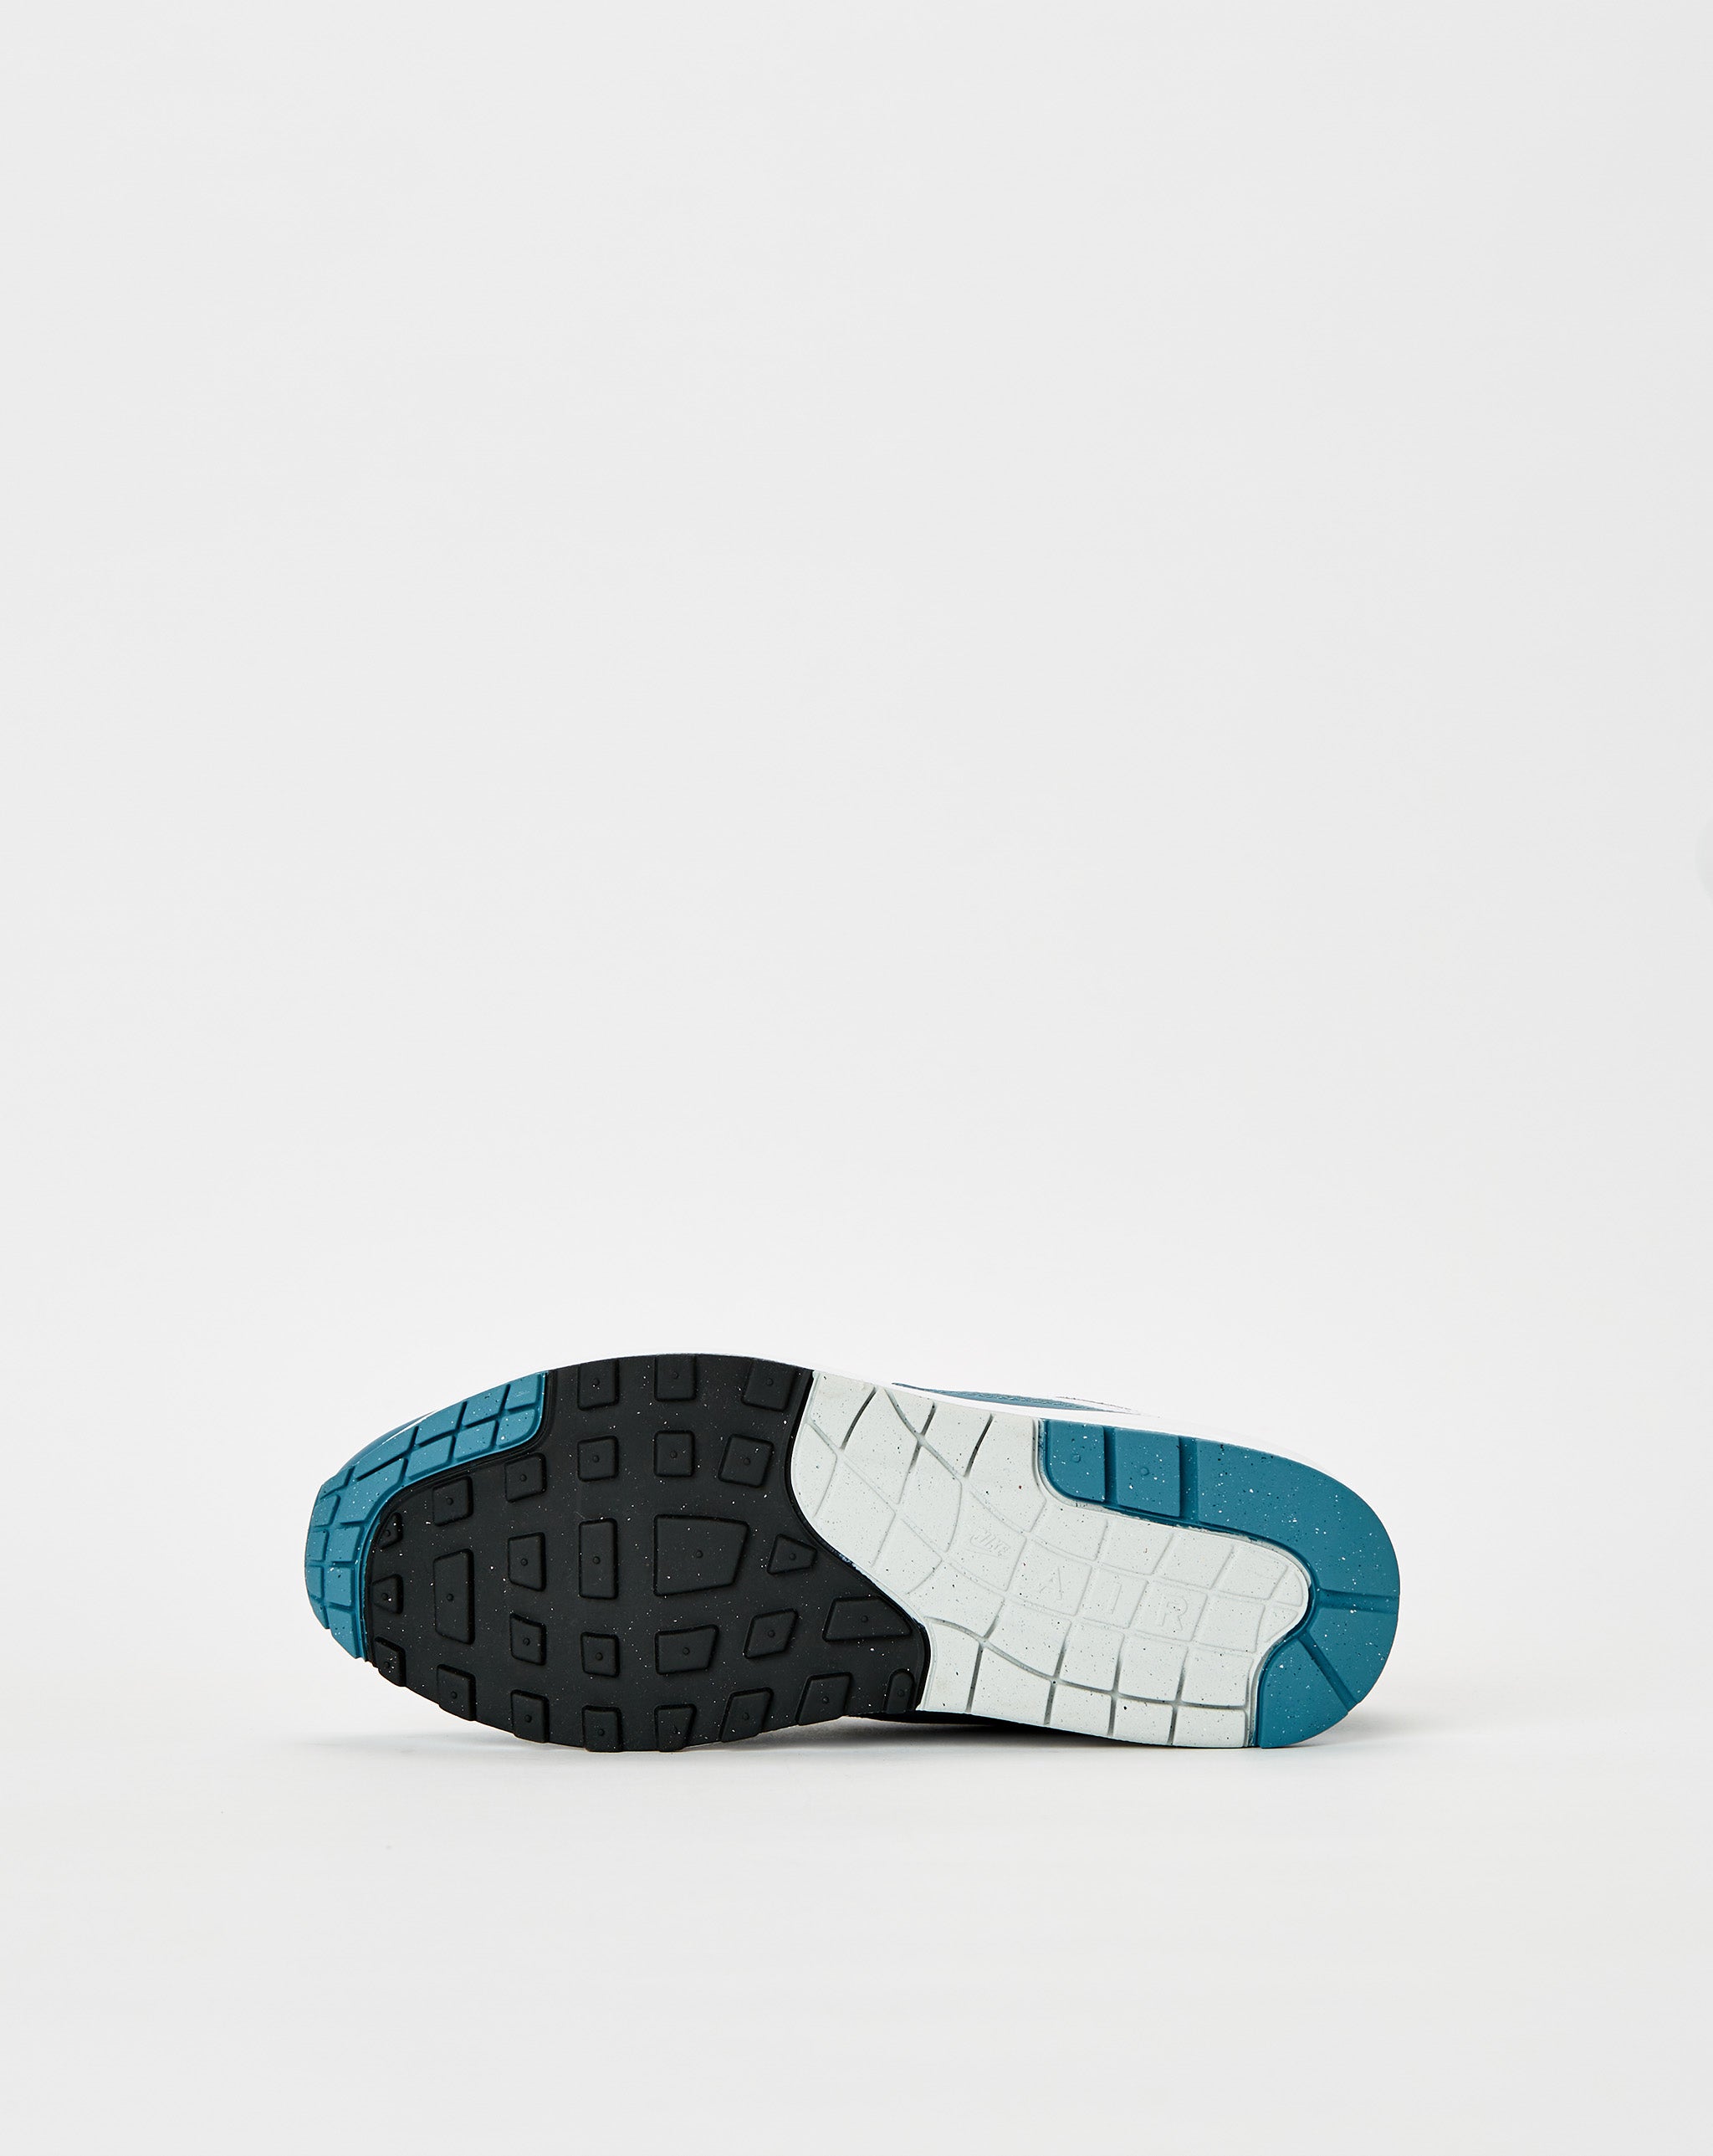 Nike bright nike mens comfort slide 2 inch wide boots  - Cheap Erlebniswelt-fliegenfischen Jordan outlet